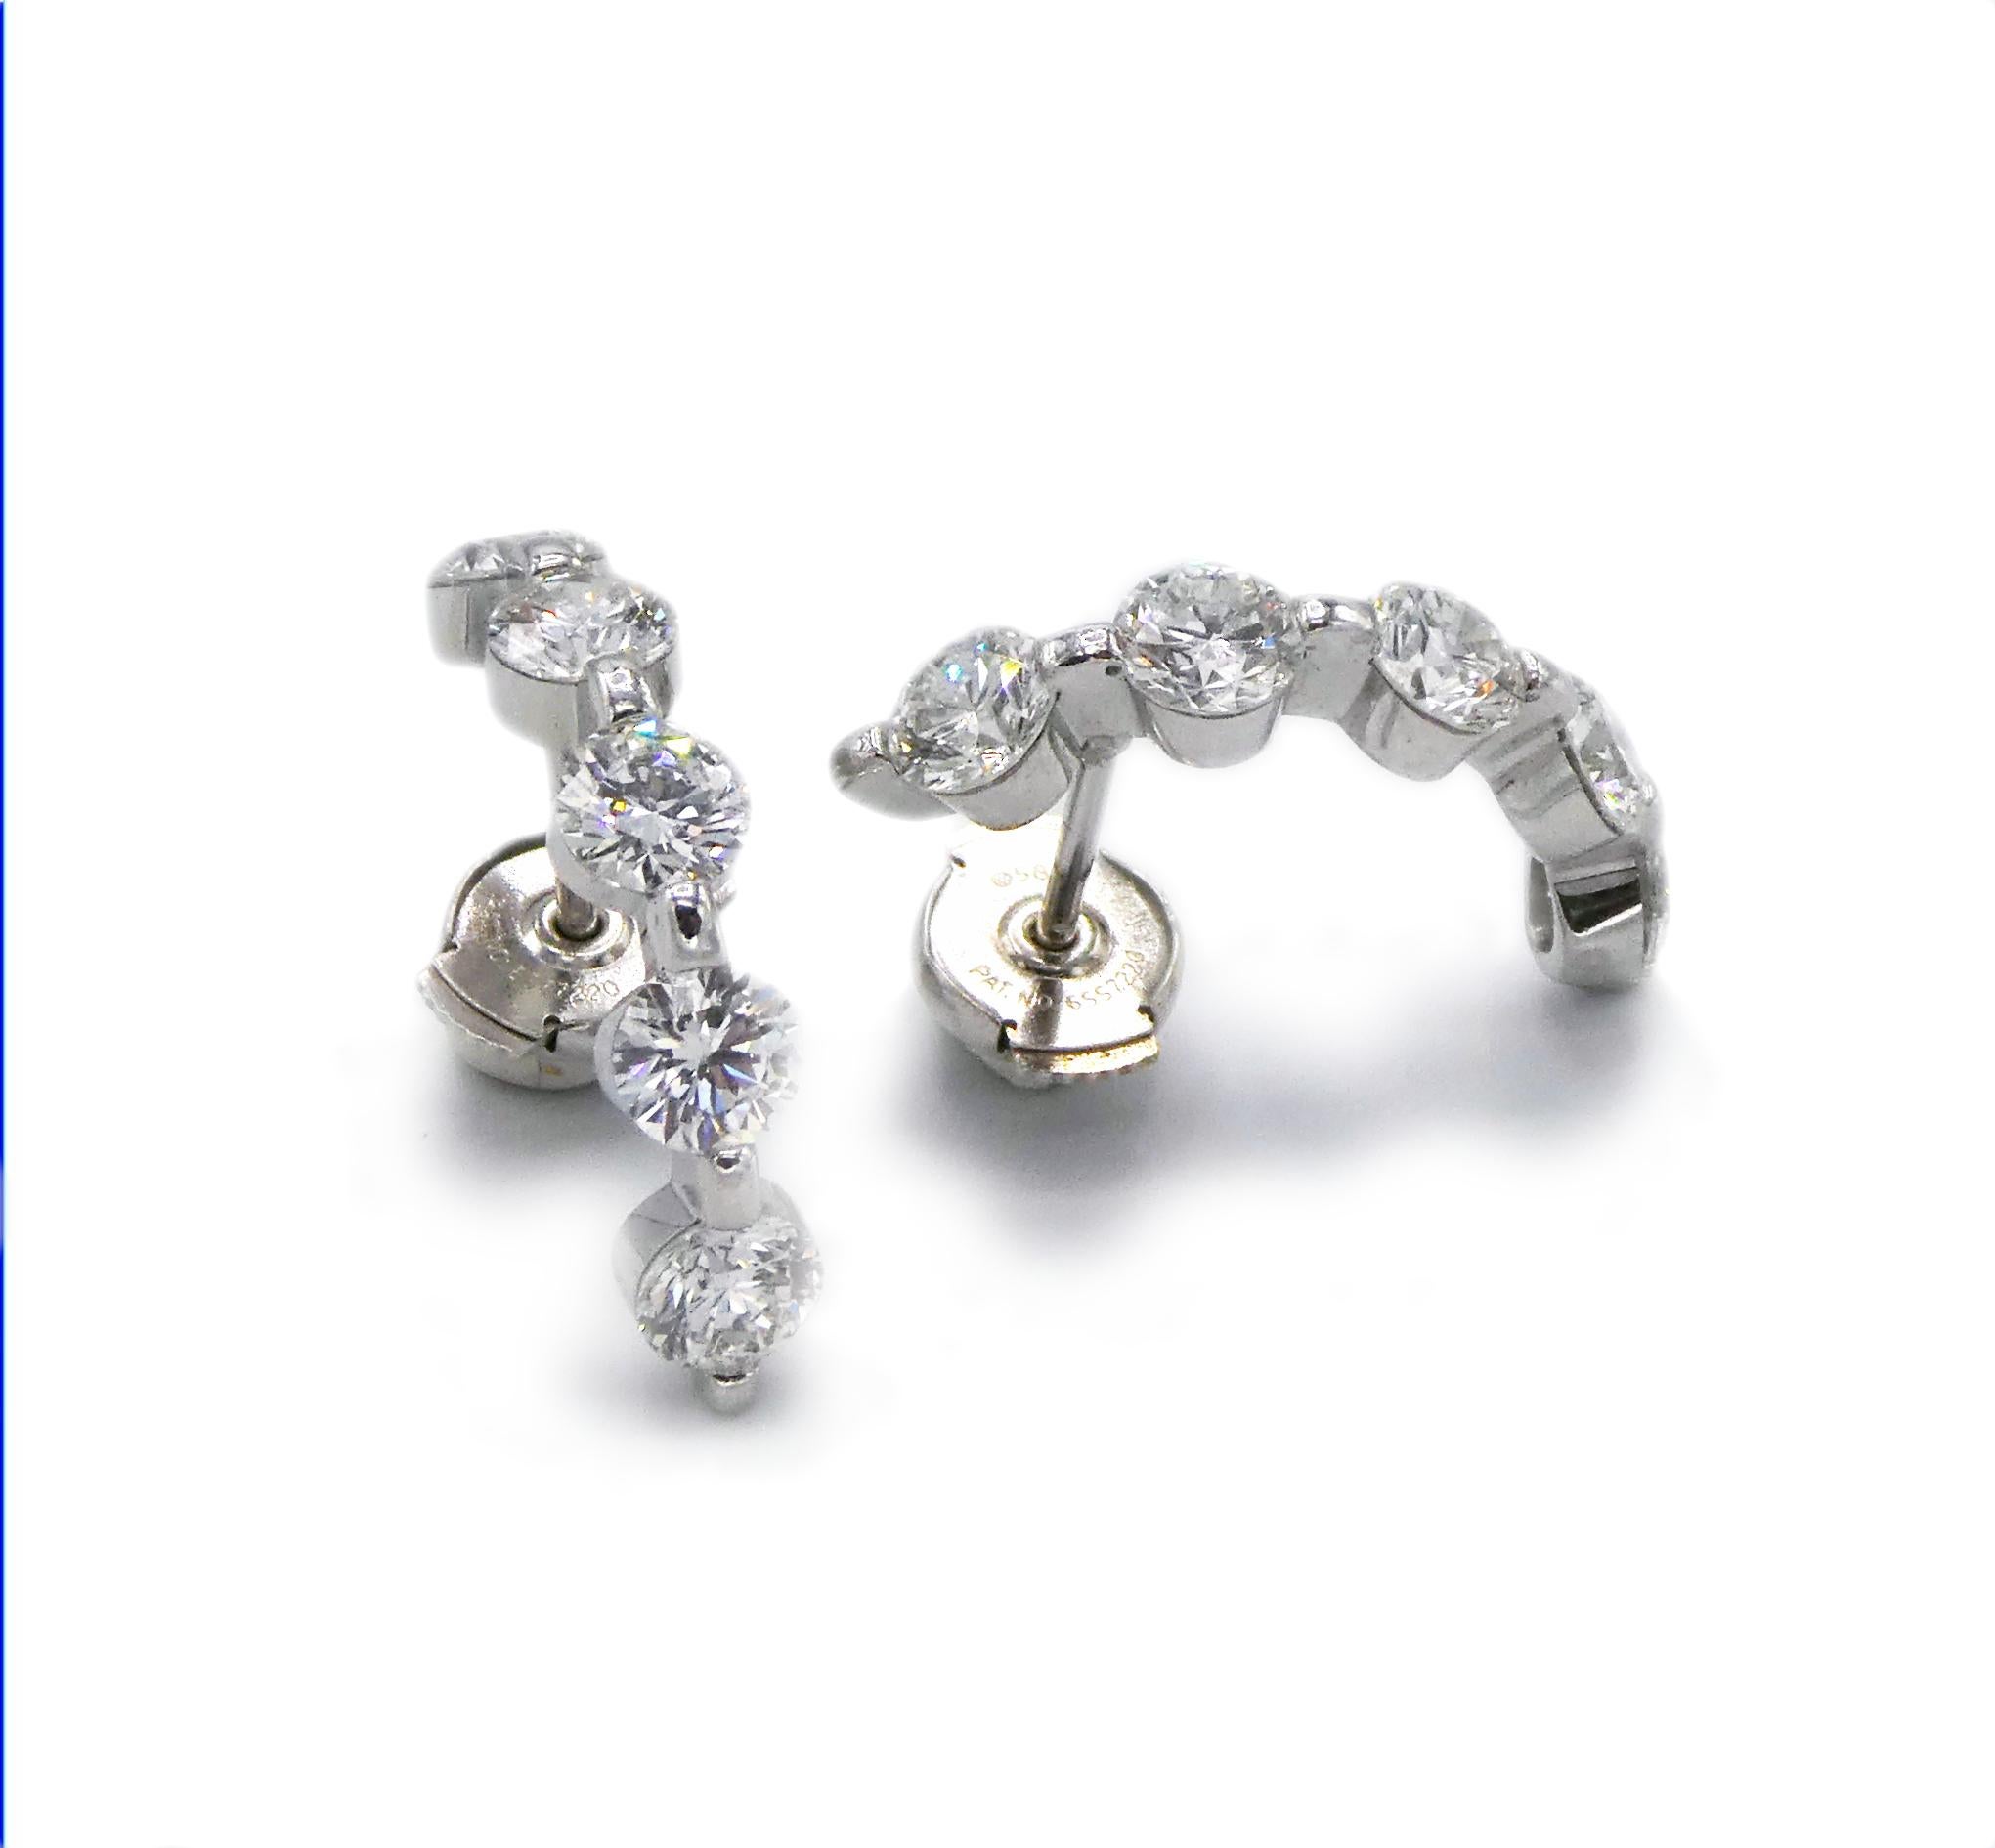 Platinum Diamond Half Hoop Earrings 2.50 CTW Diamonds

Metal: Platinum (backs are 14K)
Weight: 4.57 grams
Diamonds: 10 round brilliant cut diamonds, approx. 2.50 CTW, F-G VS
Length: 3/4 inch
